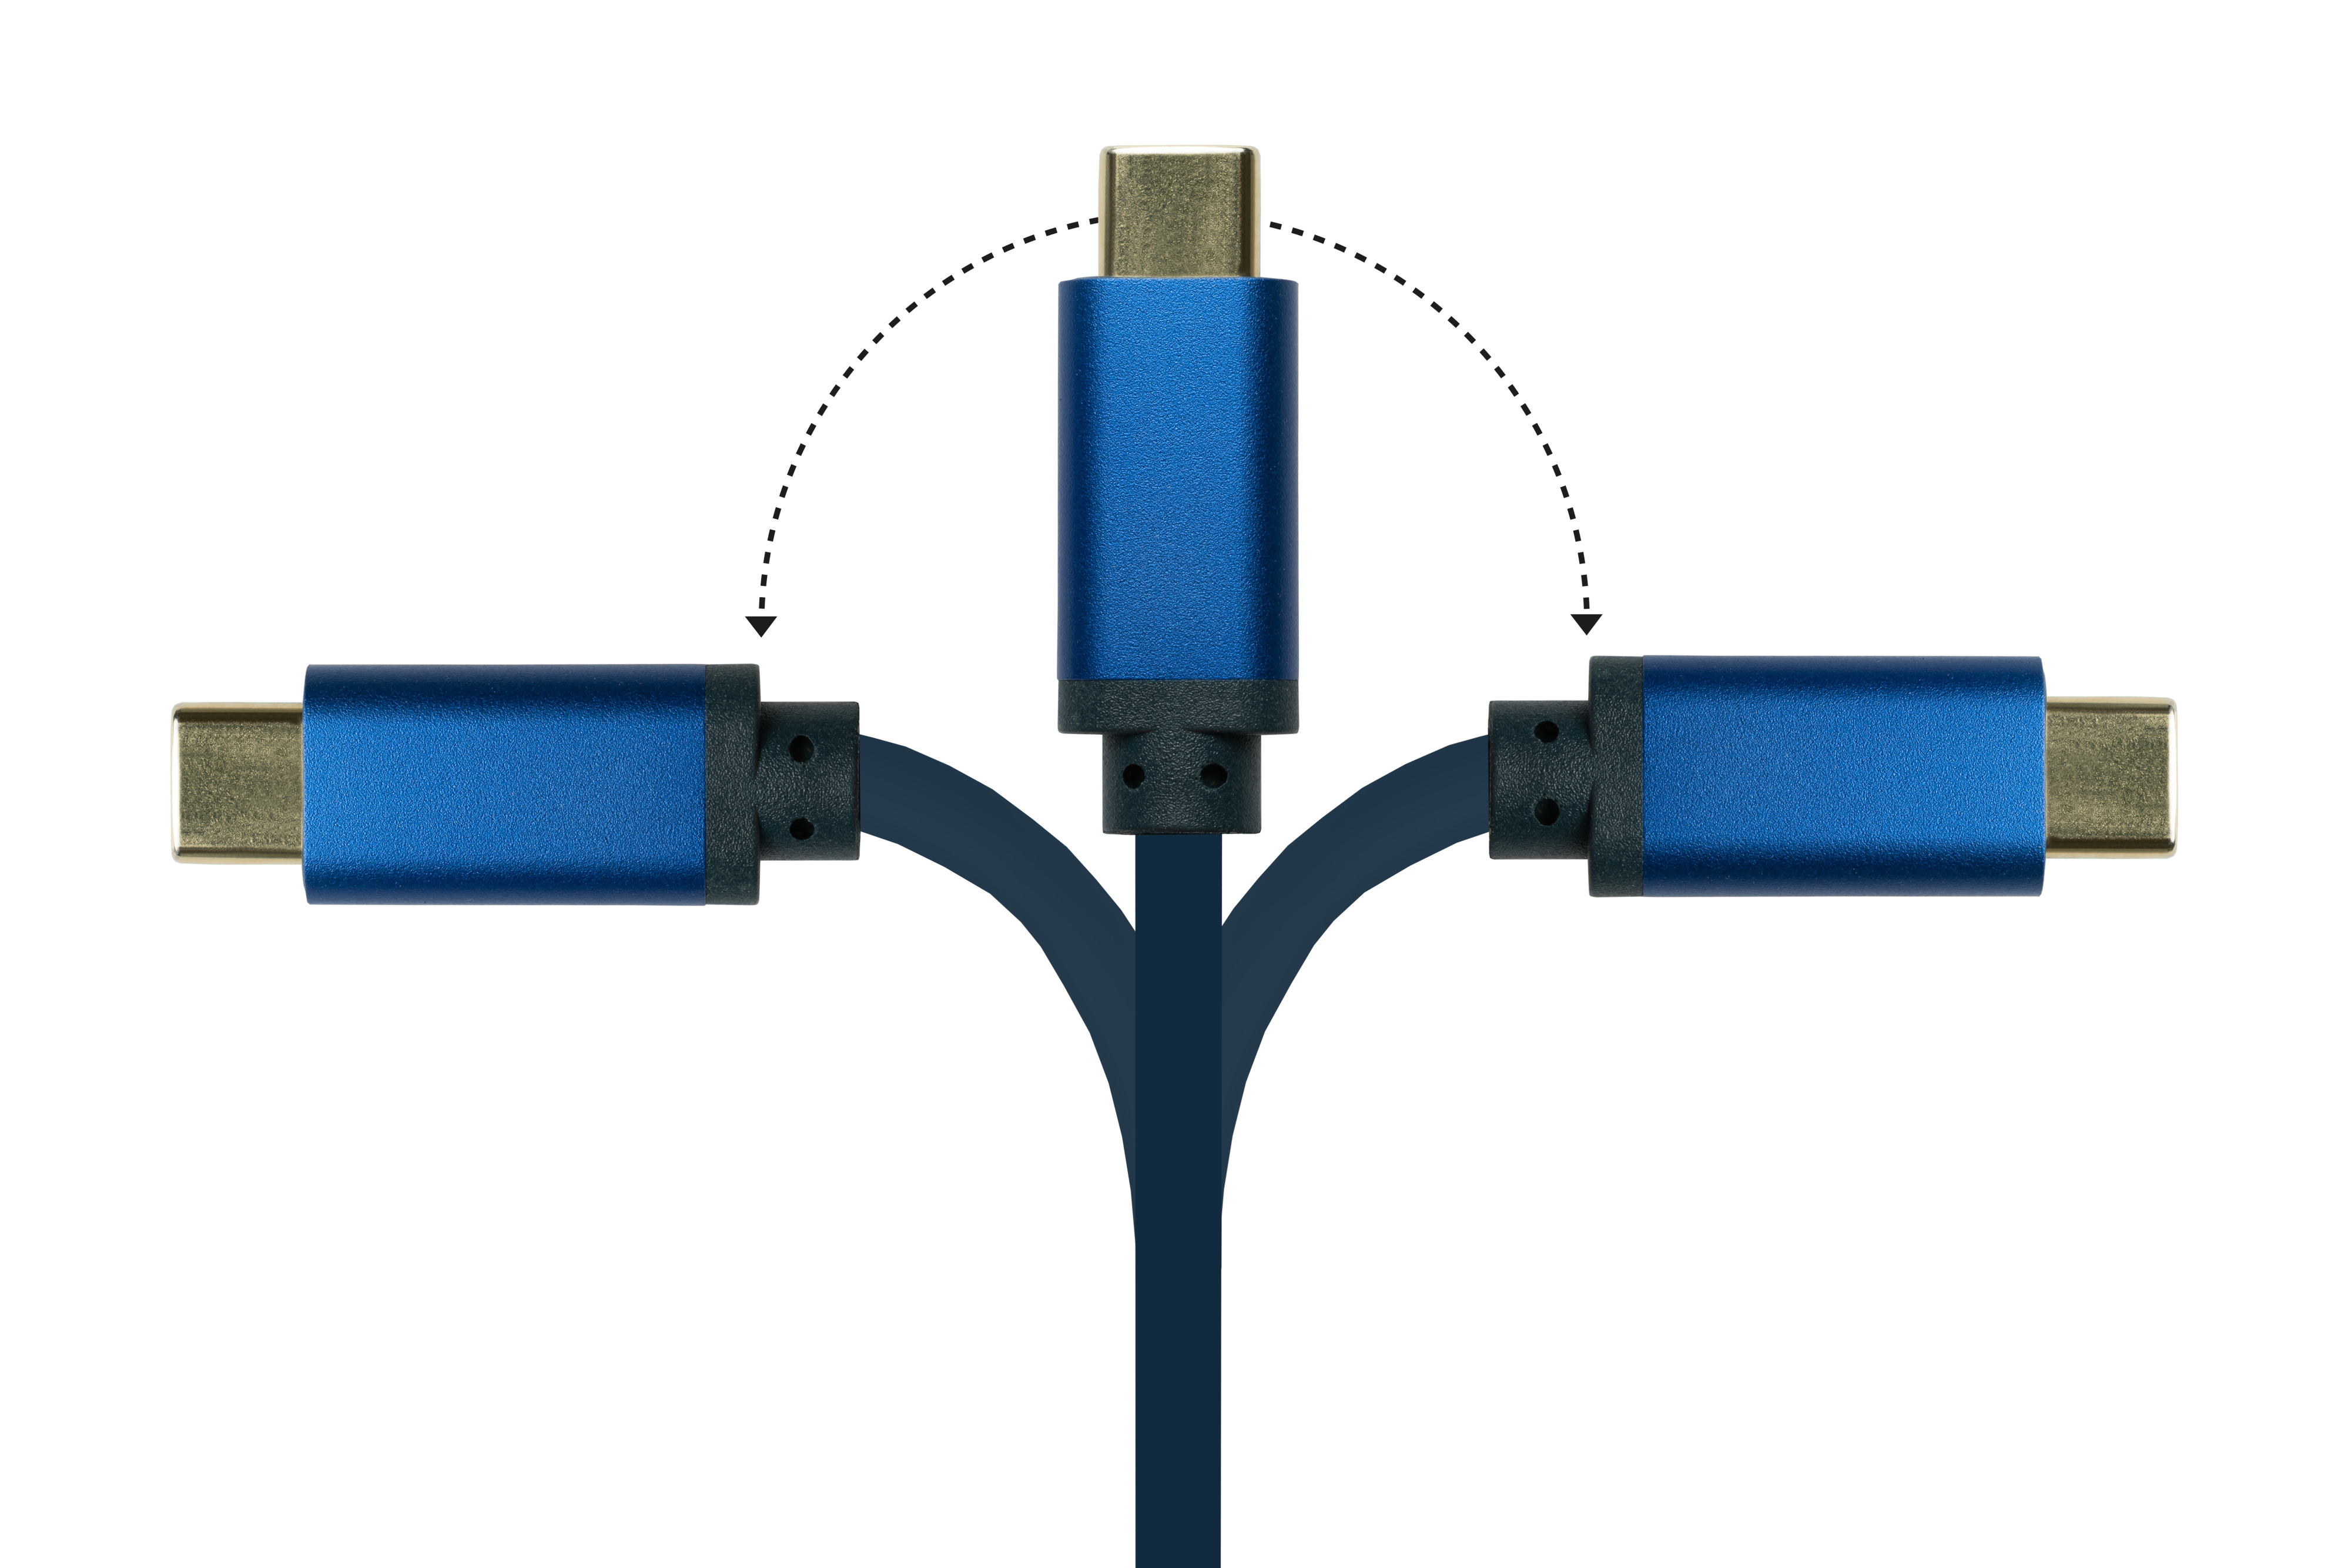 USB-C™ dunkelblau Kabel, SmartFLEX Aluminiumgehäuse, an CONNECTIONS UHD GOOD @60Hz, 2.0b HDMI Adapterkabel 4K CU,